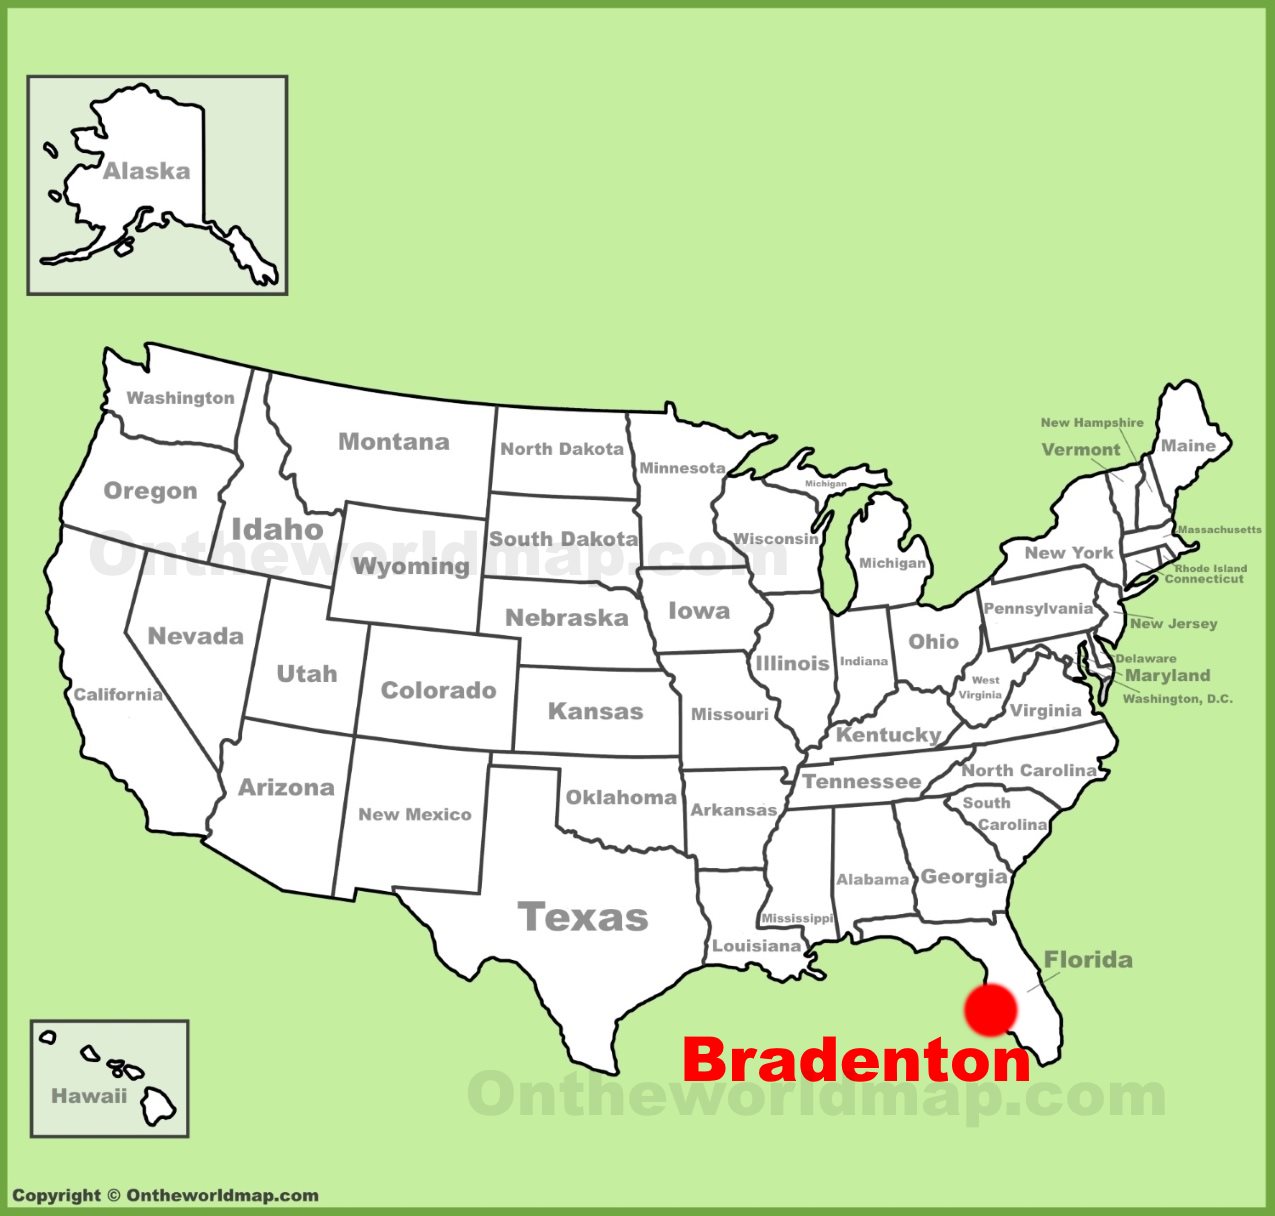 Bradenton Location On The Us Map 